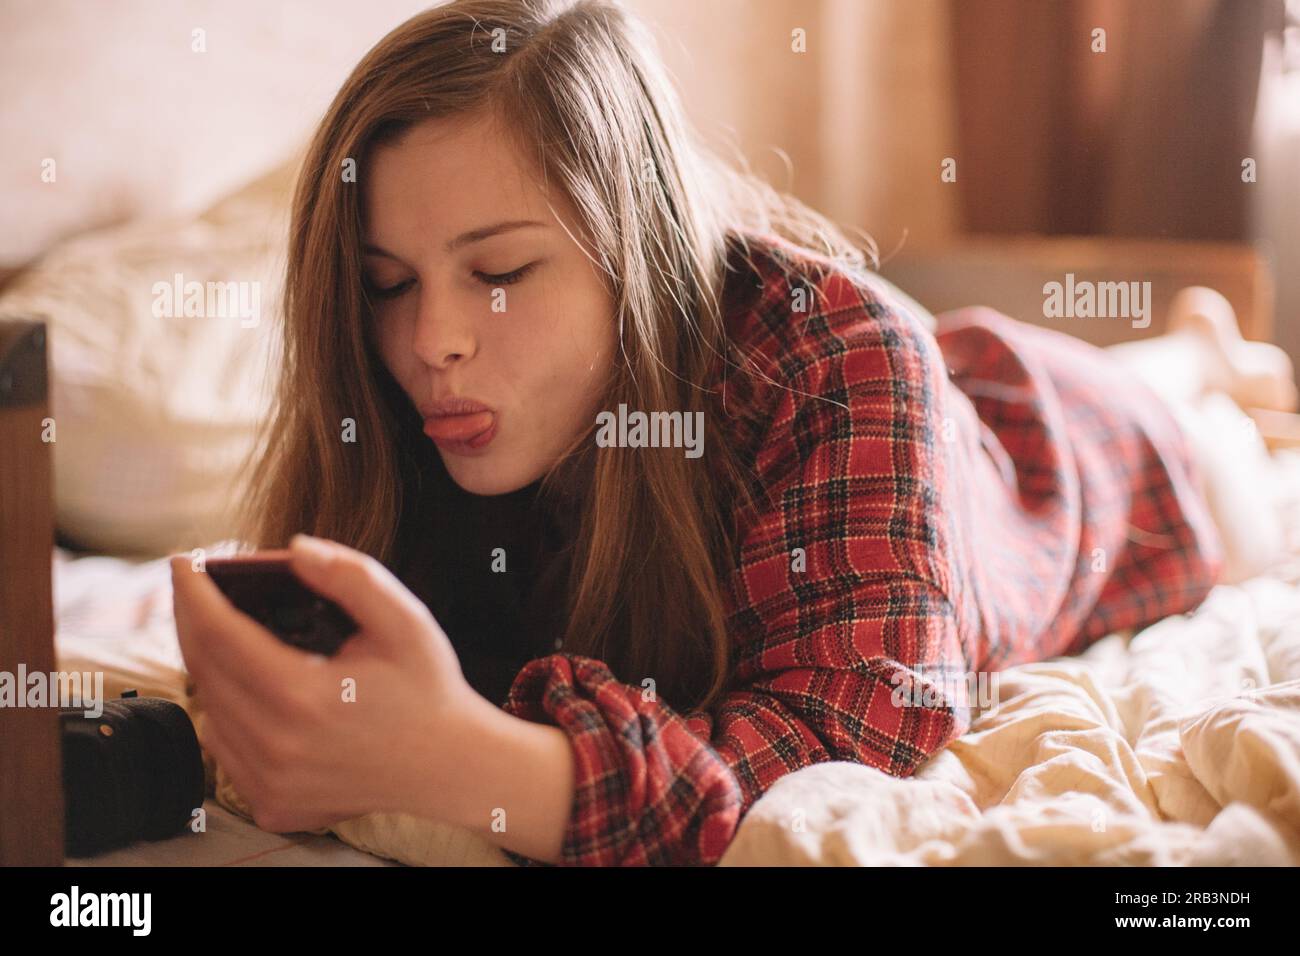 Teenage girl sticking tongue while using smart phone lying on bed Stock Photo